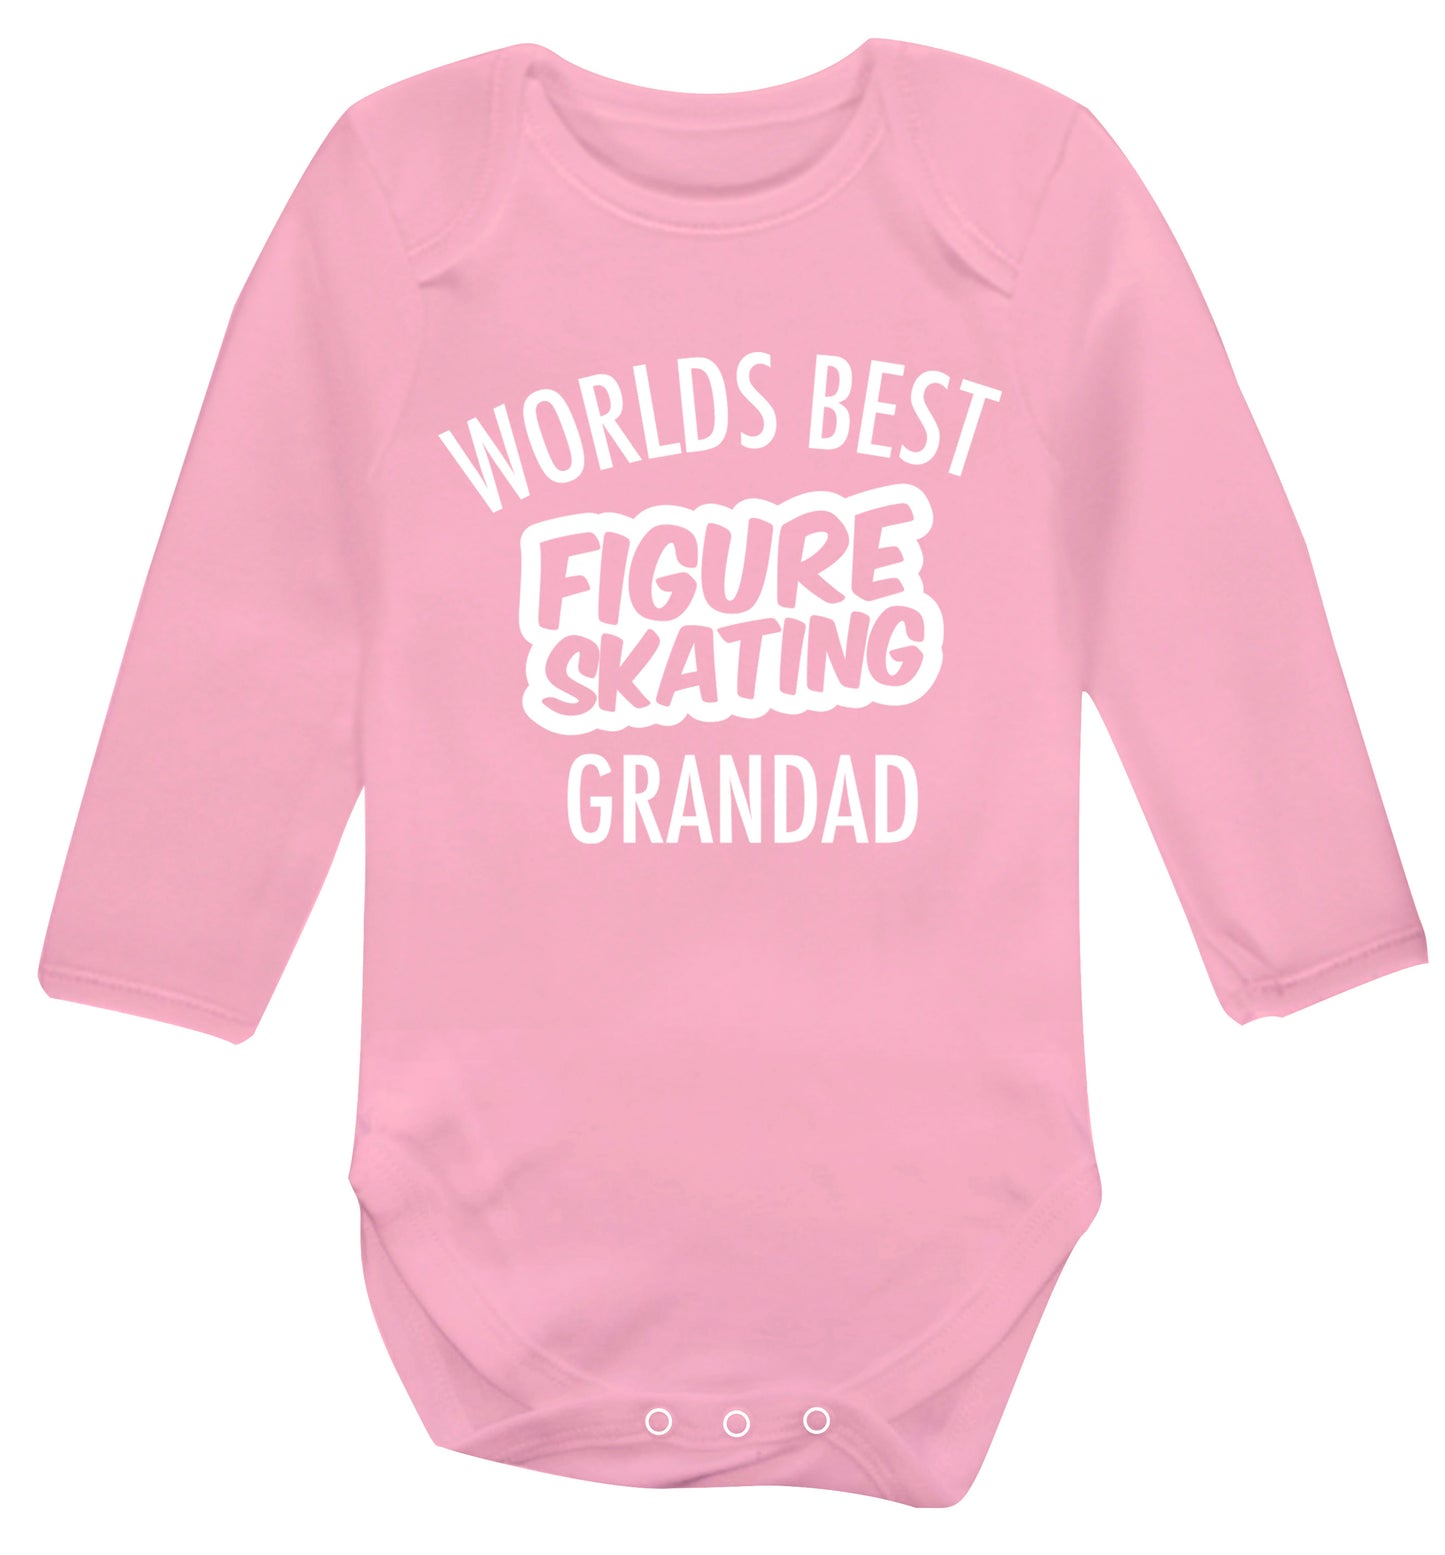 Worlds best figure skating grandad Baby Vest long sleeved pale pink 6-12 months